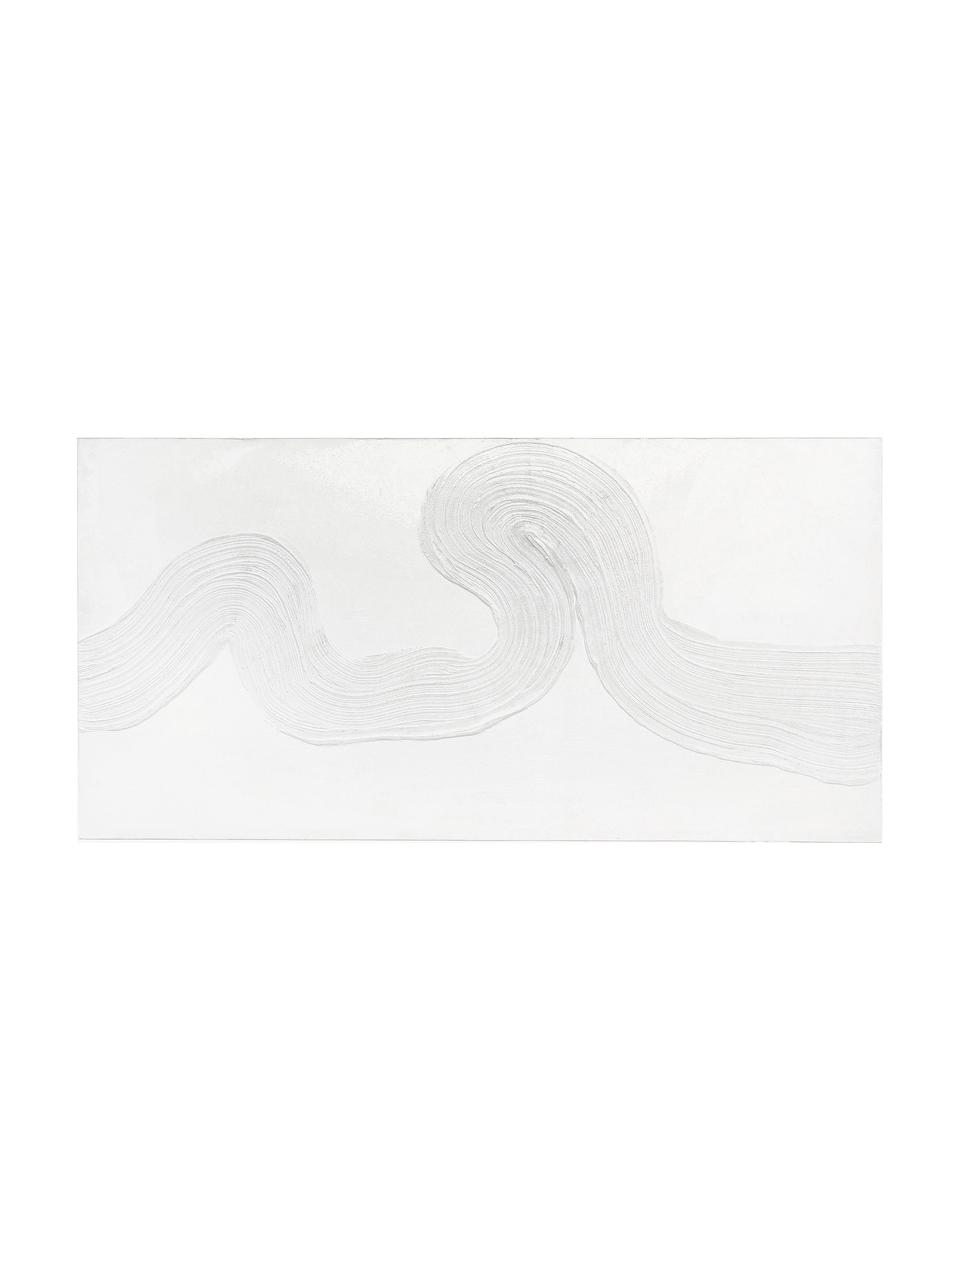 Obrázek na plátně Texture, Bílá, Š 140 cm, V 70 cm